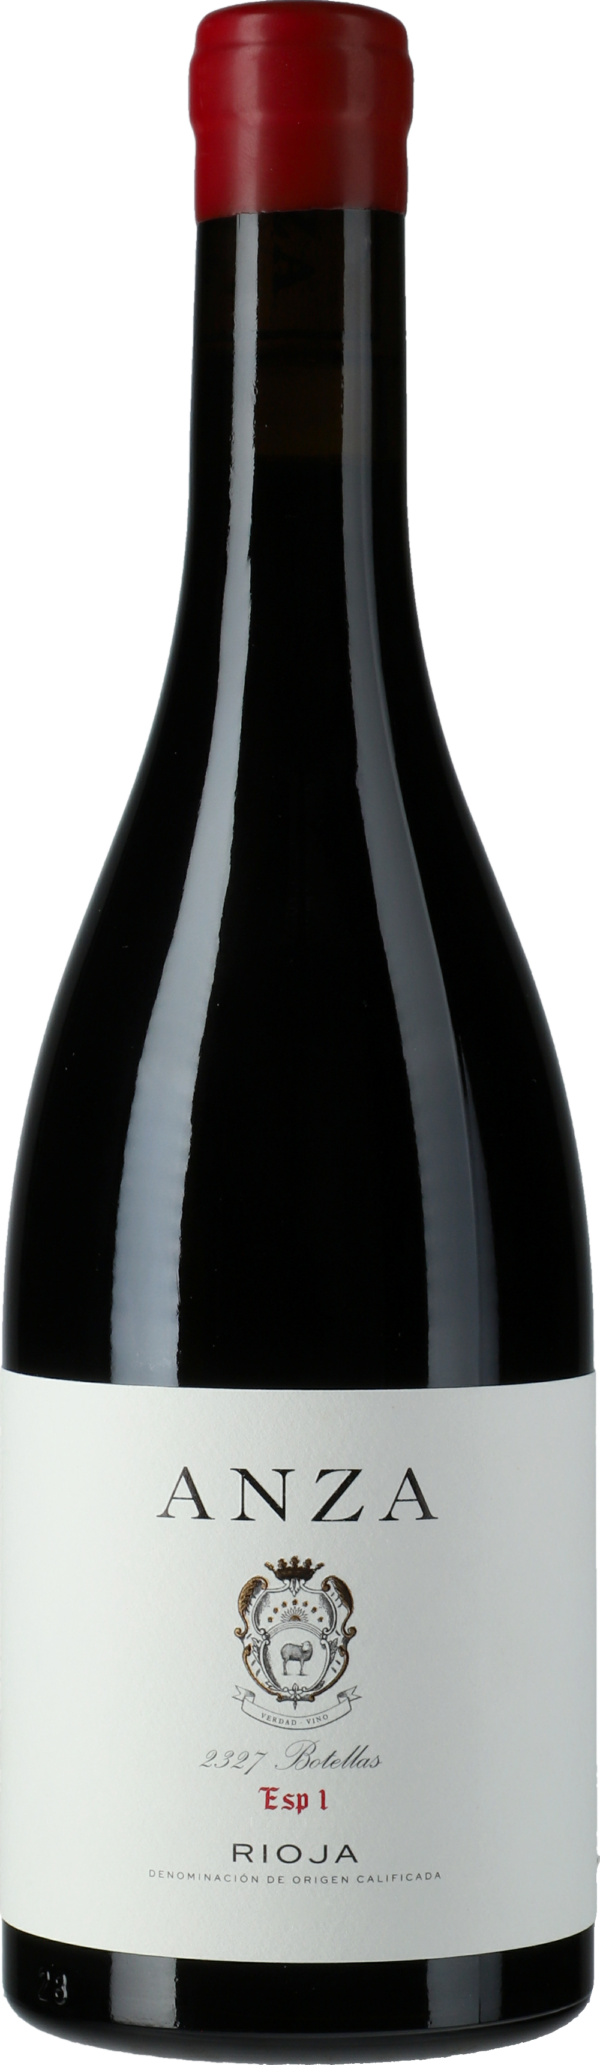 Product image of Dominio de Anza Especial 1 Rioja 2020 from 8wines